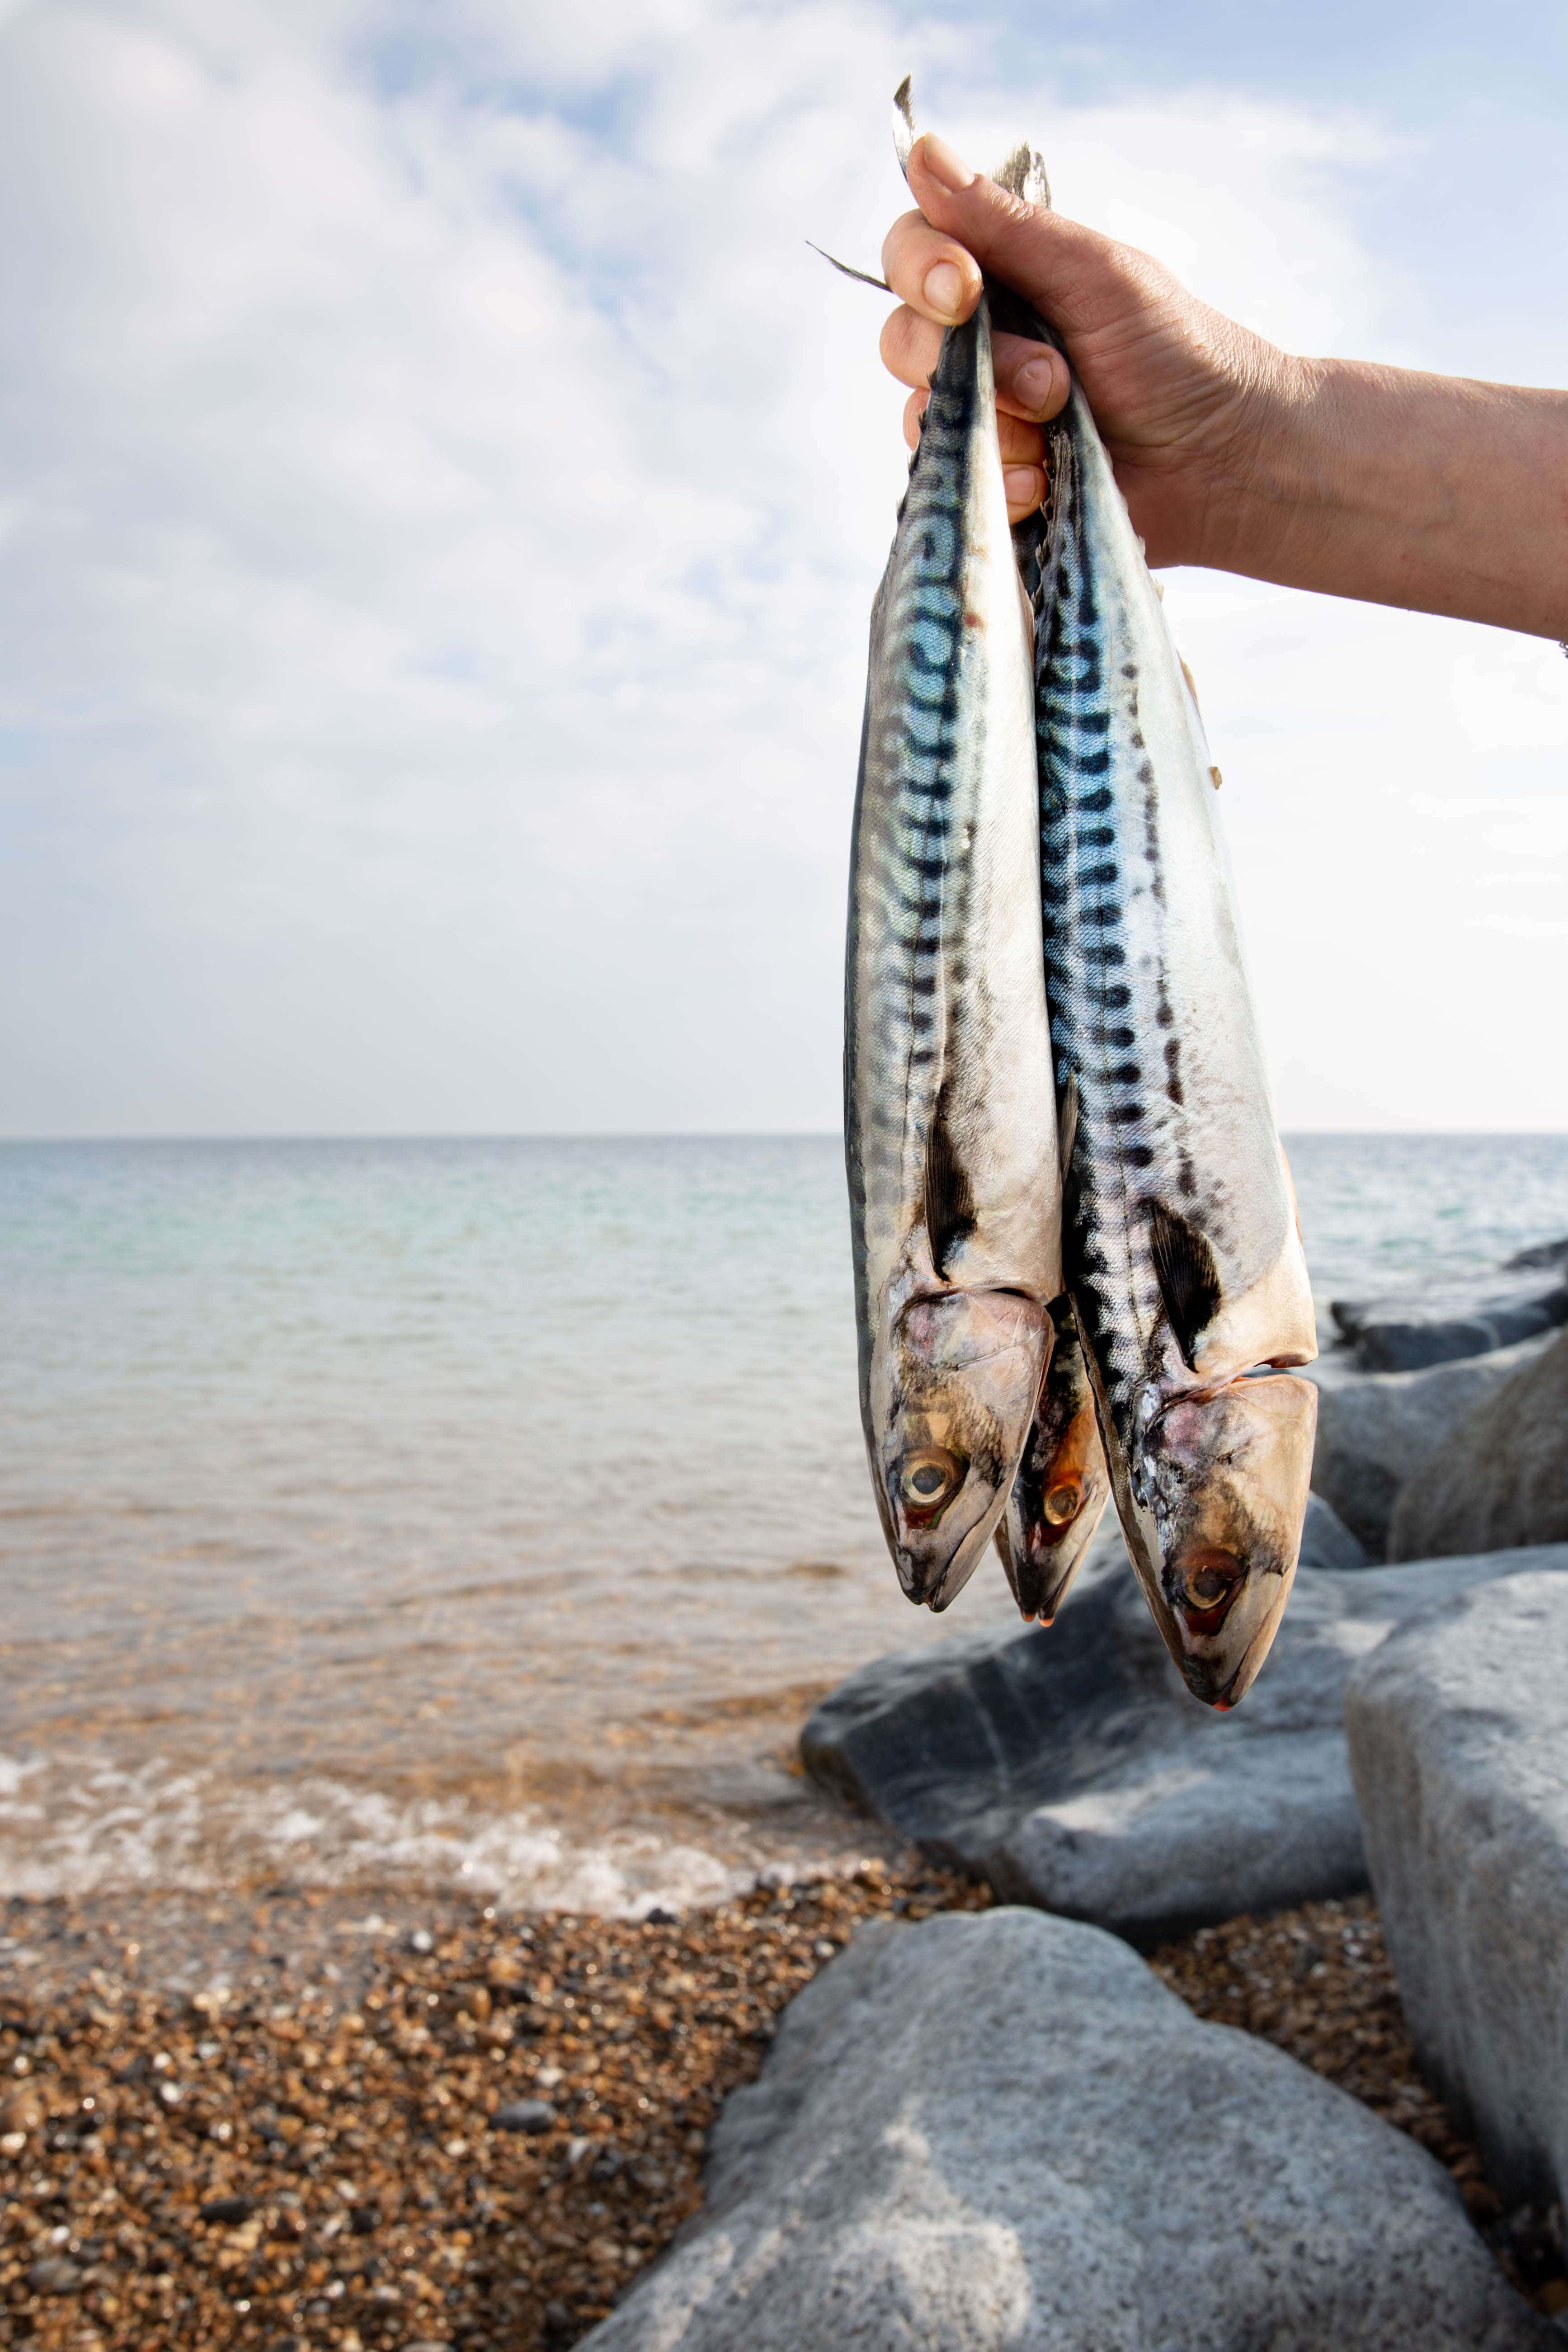 Three fresh mackerel being held up on the beach.